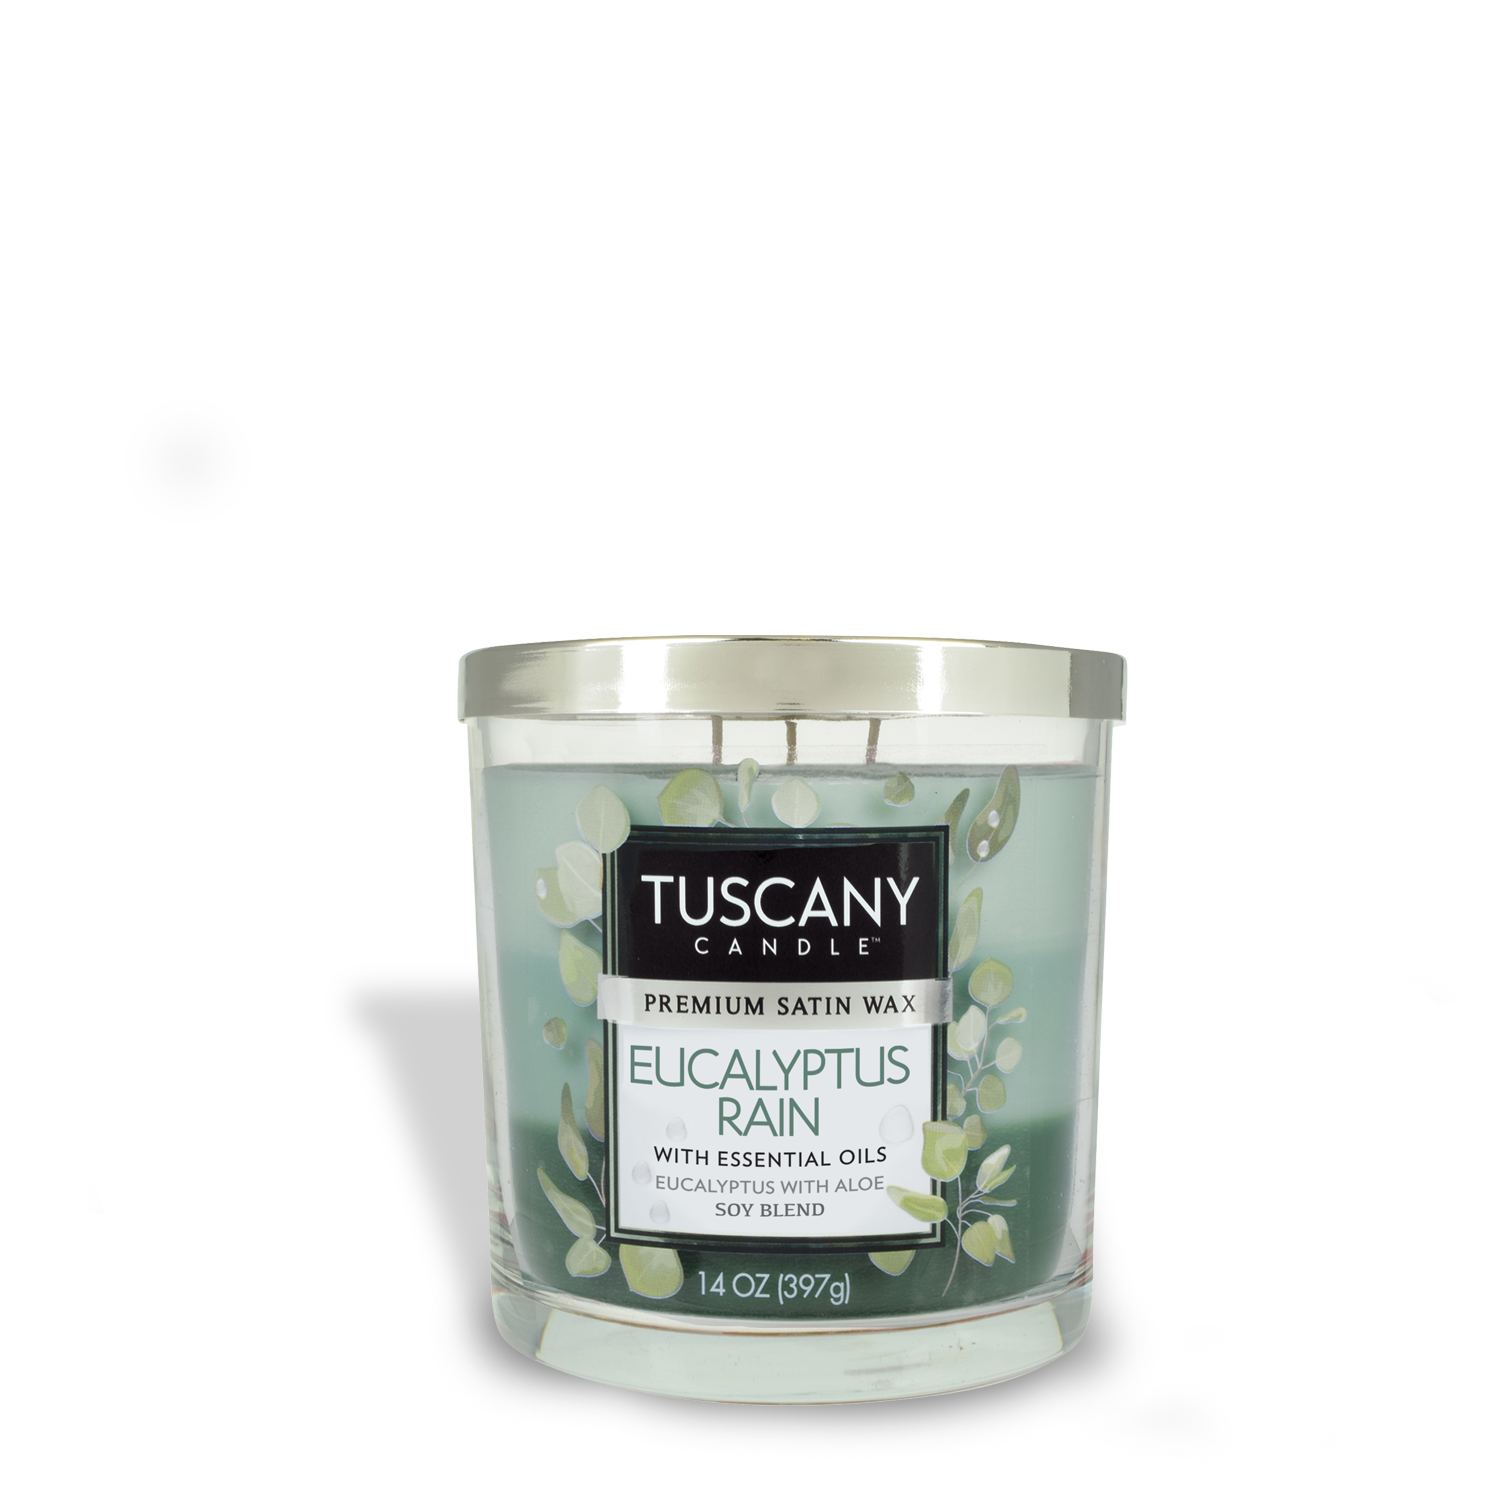 Tuscany Candle® EVD Eucalyptus Rain Long-Lasting Scented Jar Candle (14 oz) with eucalyptus relaxation aroma.